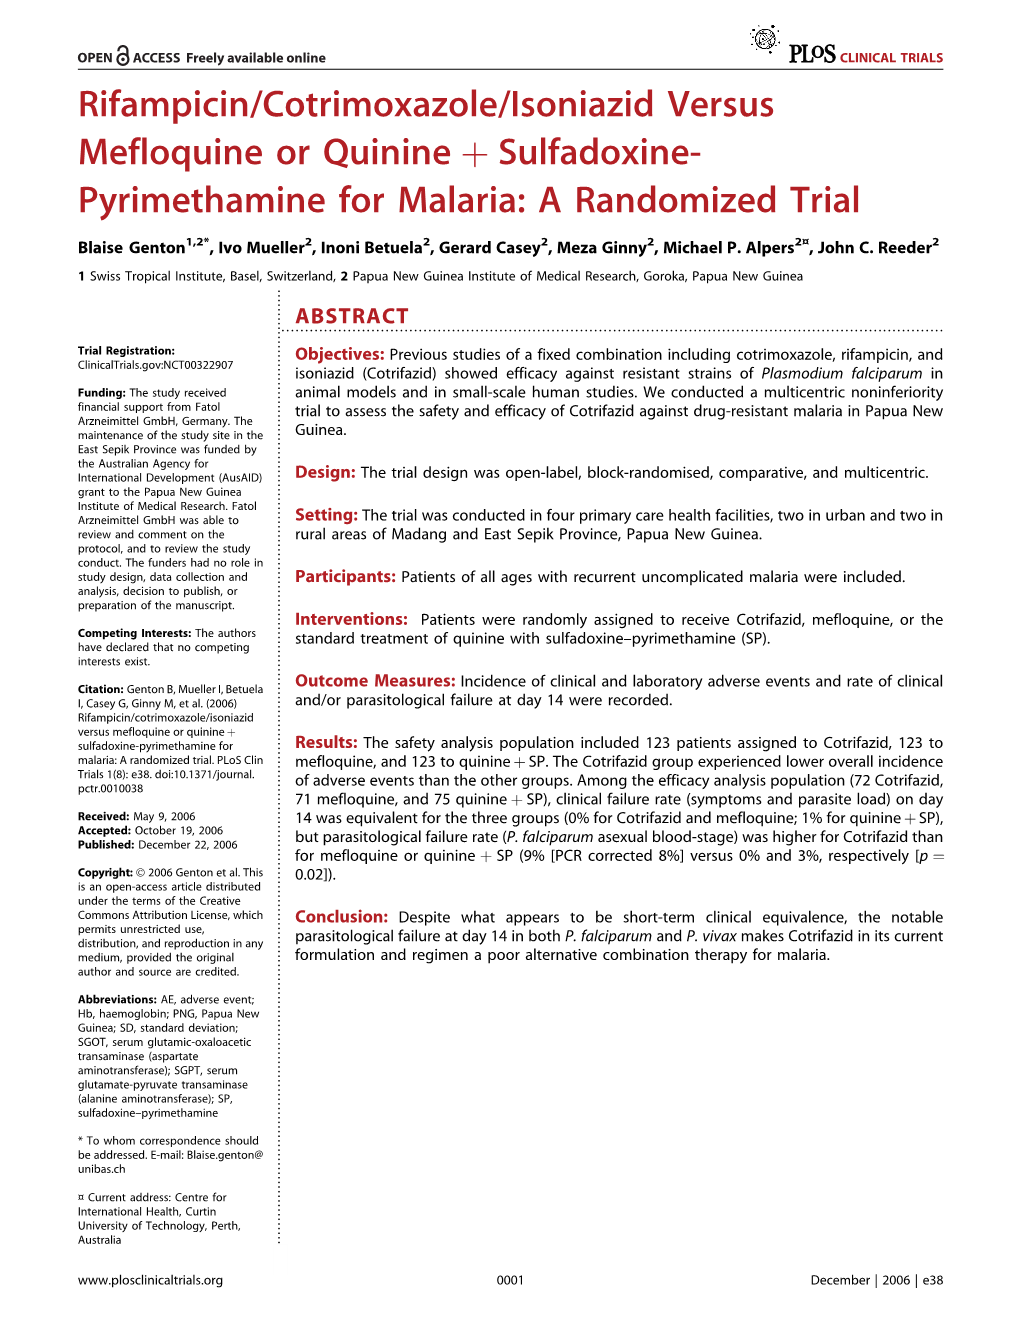 Rifampicin/Cotrimoxazole/Isoniazid Versus Mefloquine Or Quinine Þ Sulfadoxine- Pyrimethamine for Malaria: a Randomized Trial